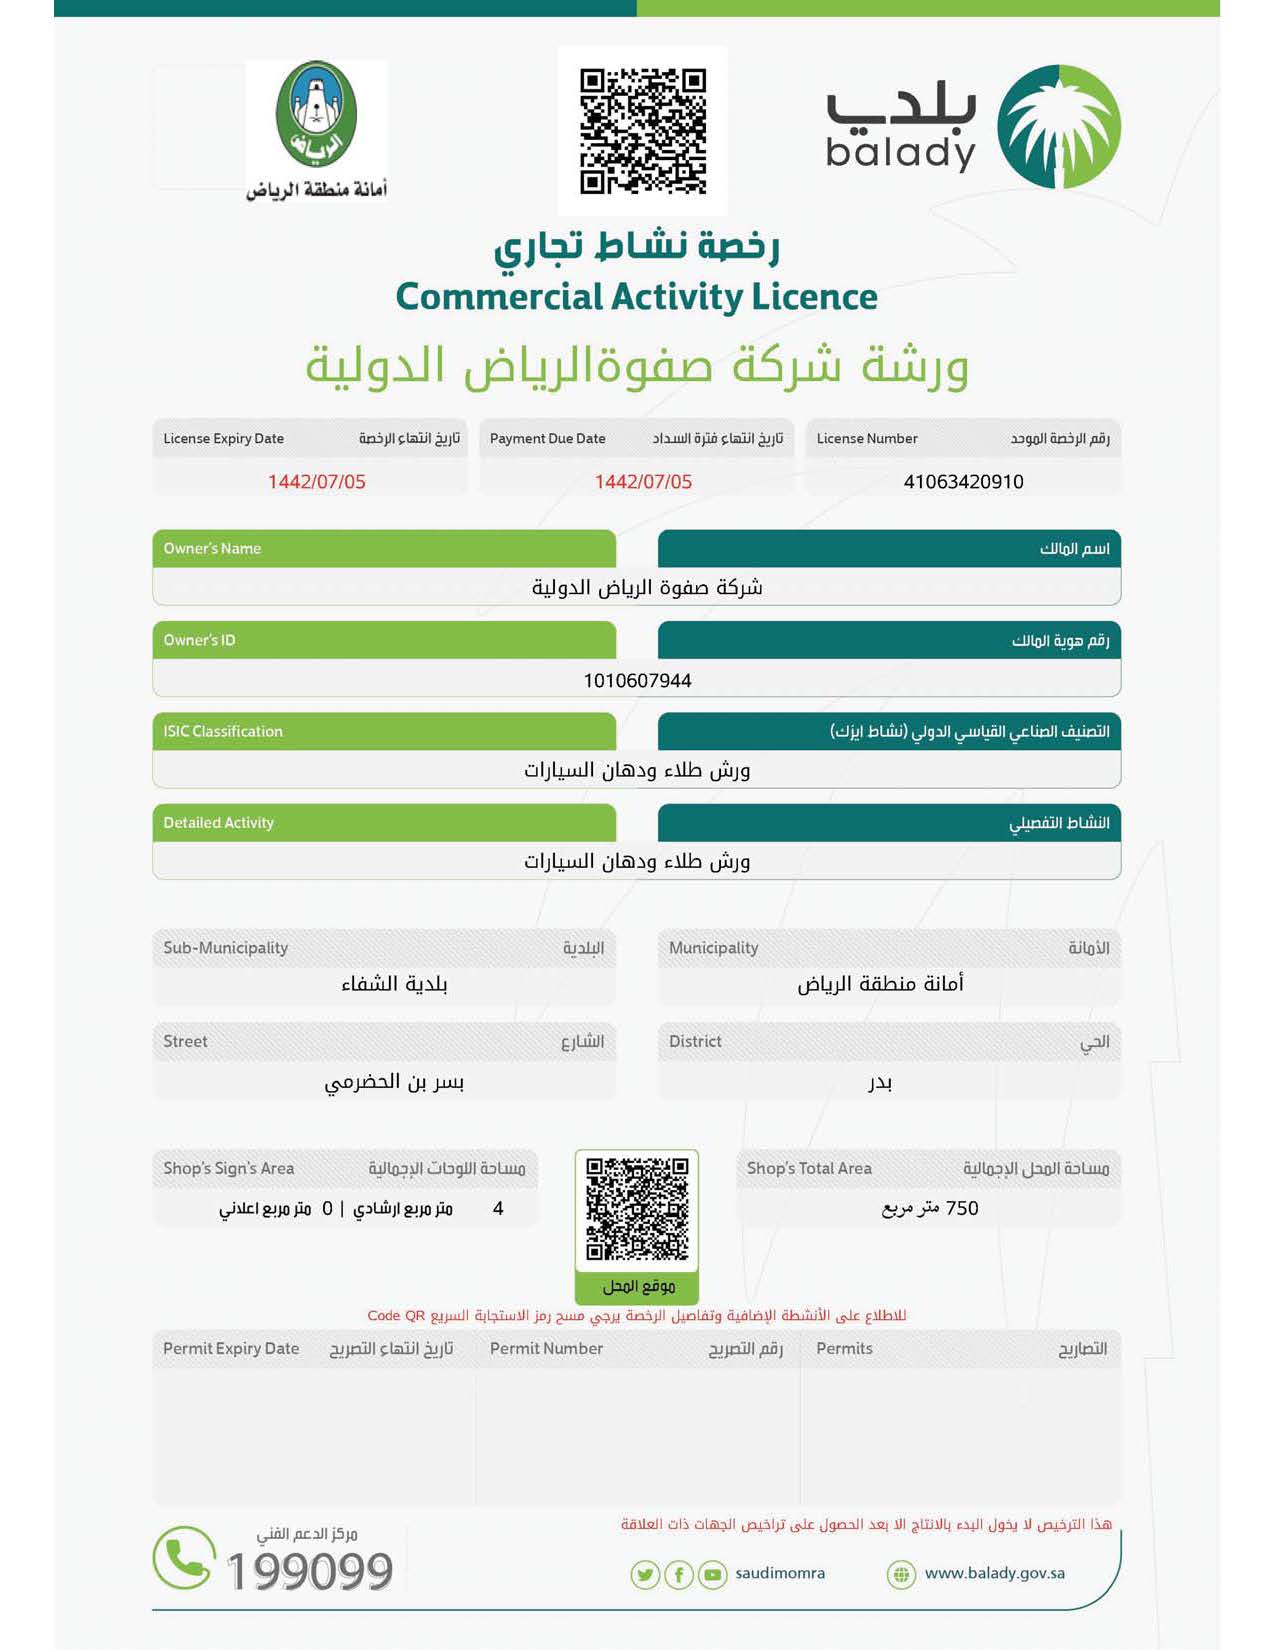 البلديات Page 17 One of the leading companies and a significant number in all its fields